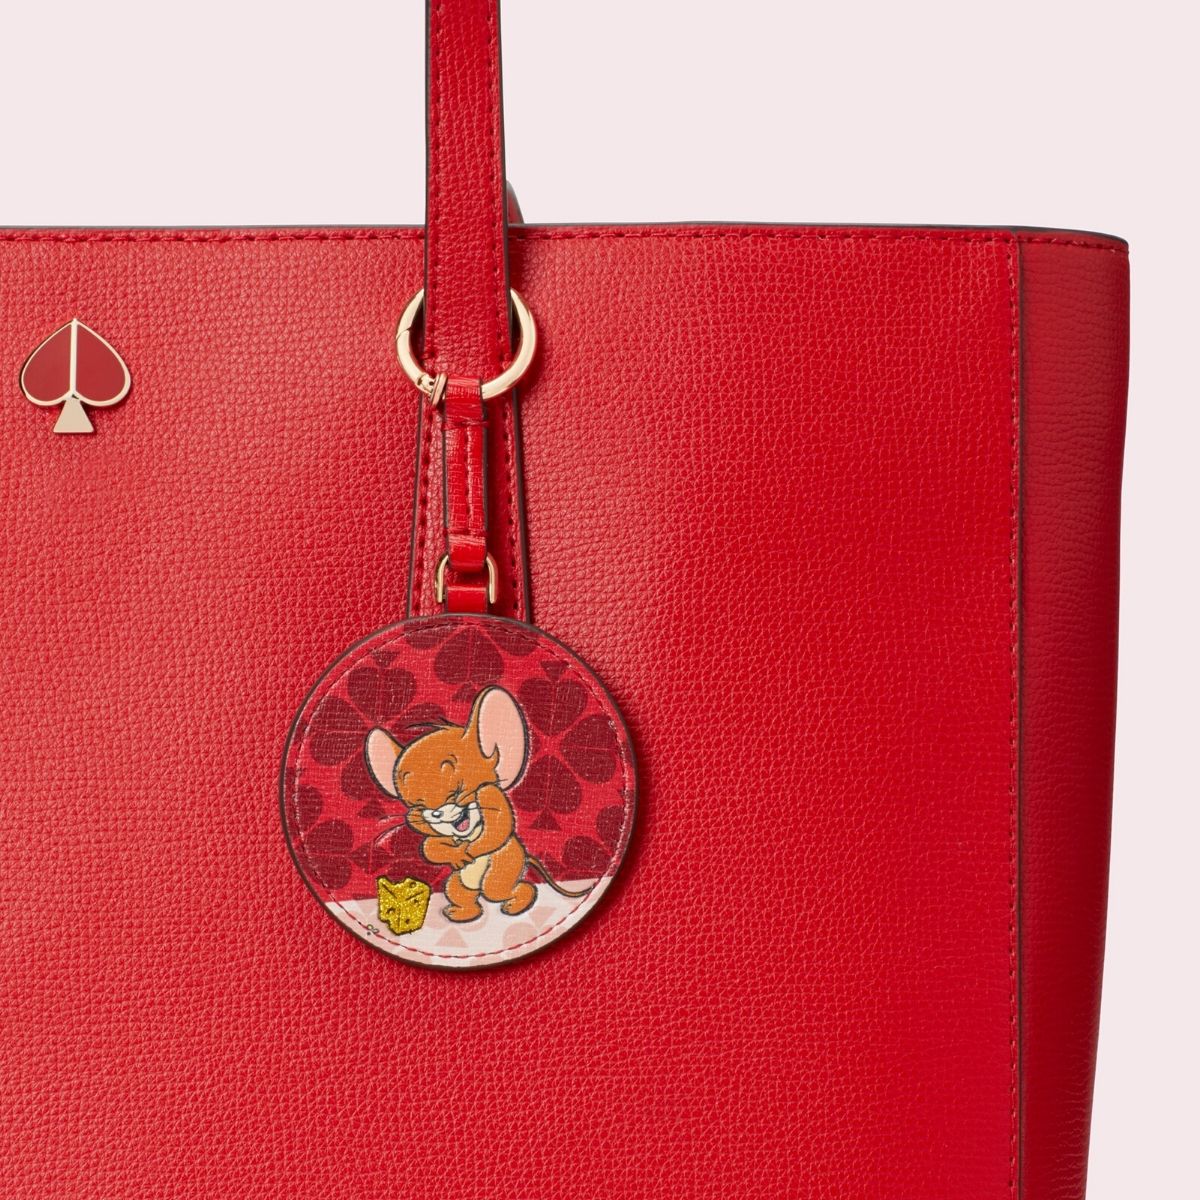 Kate Spade Tom & Jerry Bag Charm Key Fob Handbag Mouse Cheese Luggage Tag